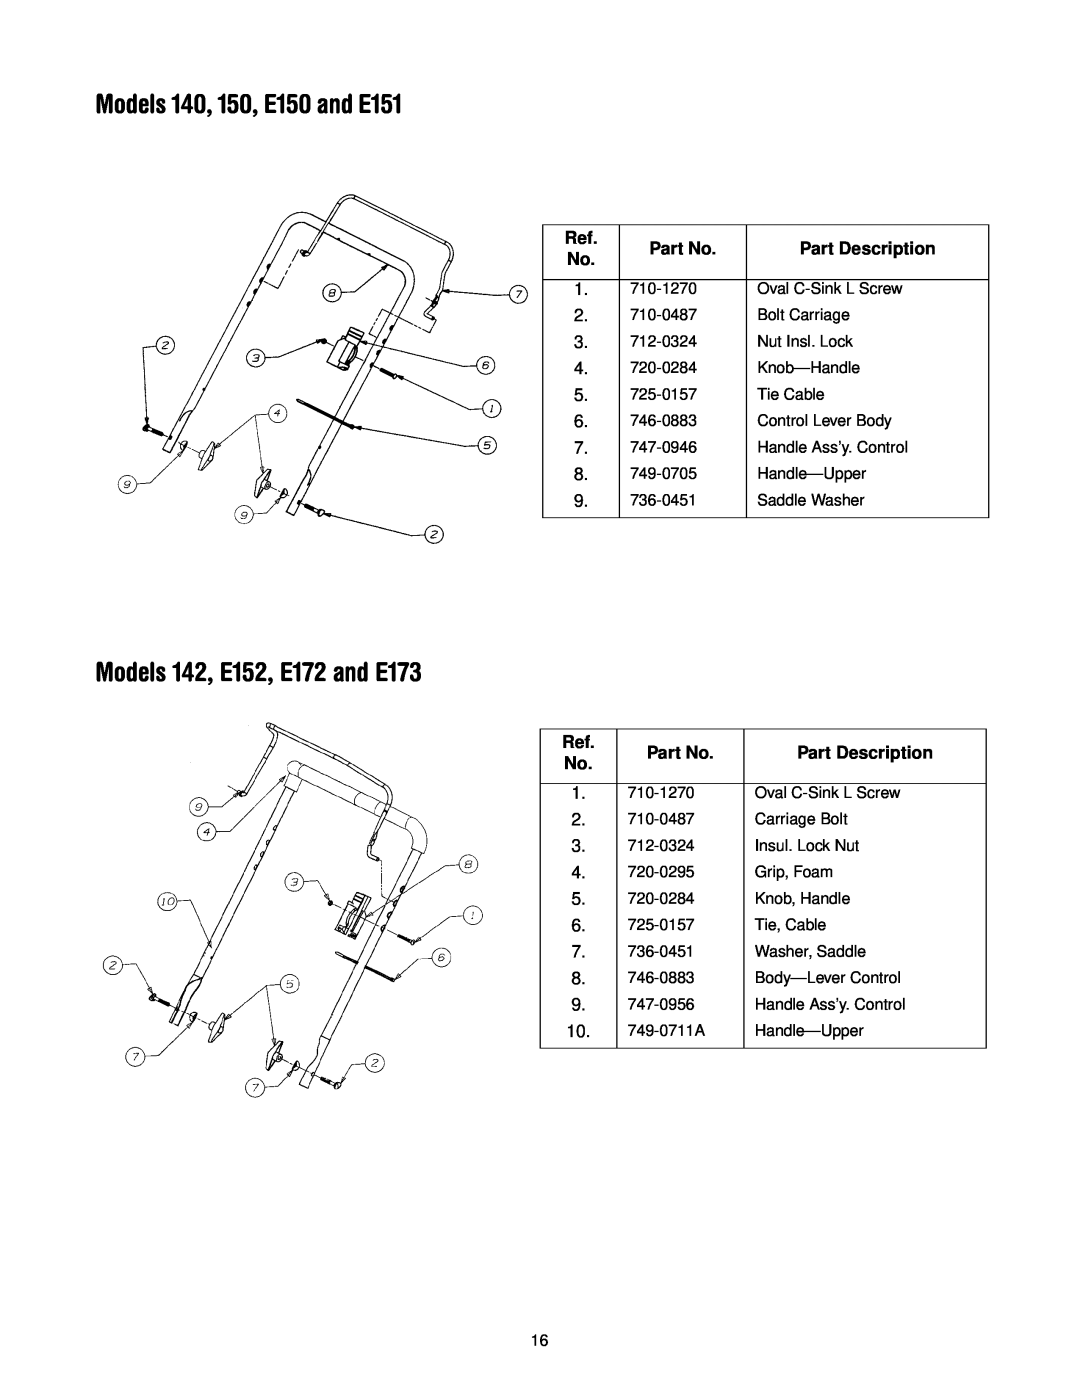 MTD Series 140 through E173 manual Models 140, 150, E150 and E151, Models 142, E152, E172 and E173, Part Description 